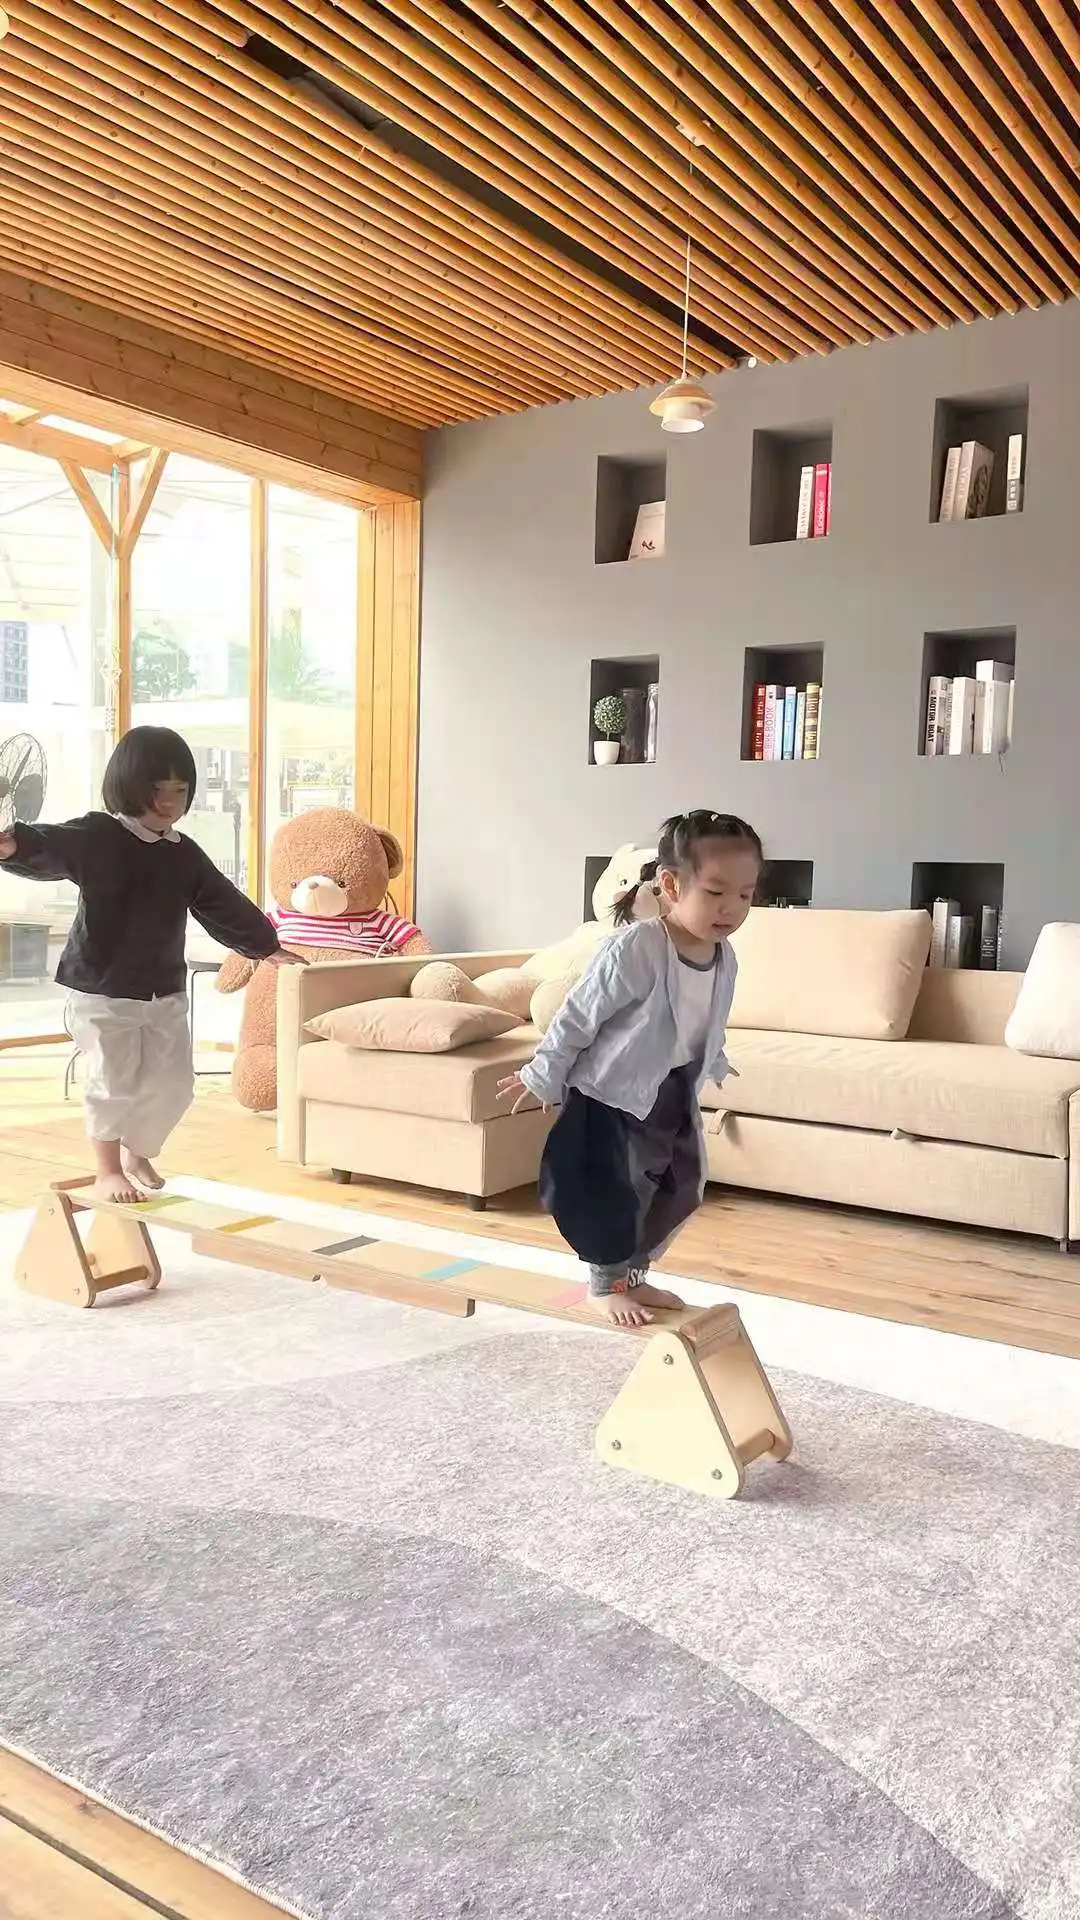 
Indoor playground set montessori baby fitness toy rocker board toddler wooden balance seesaw 